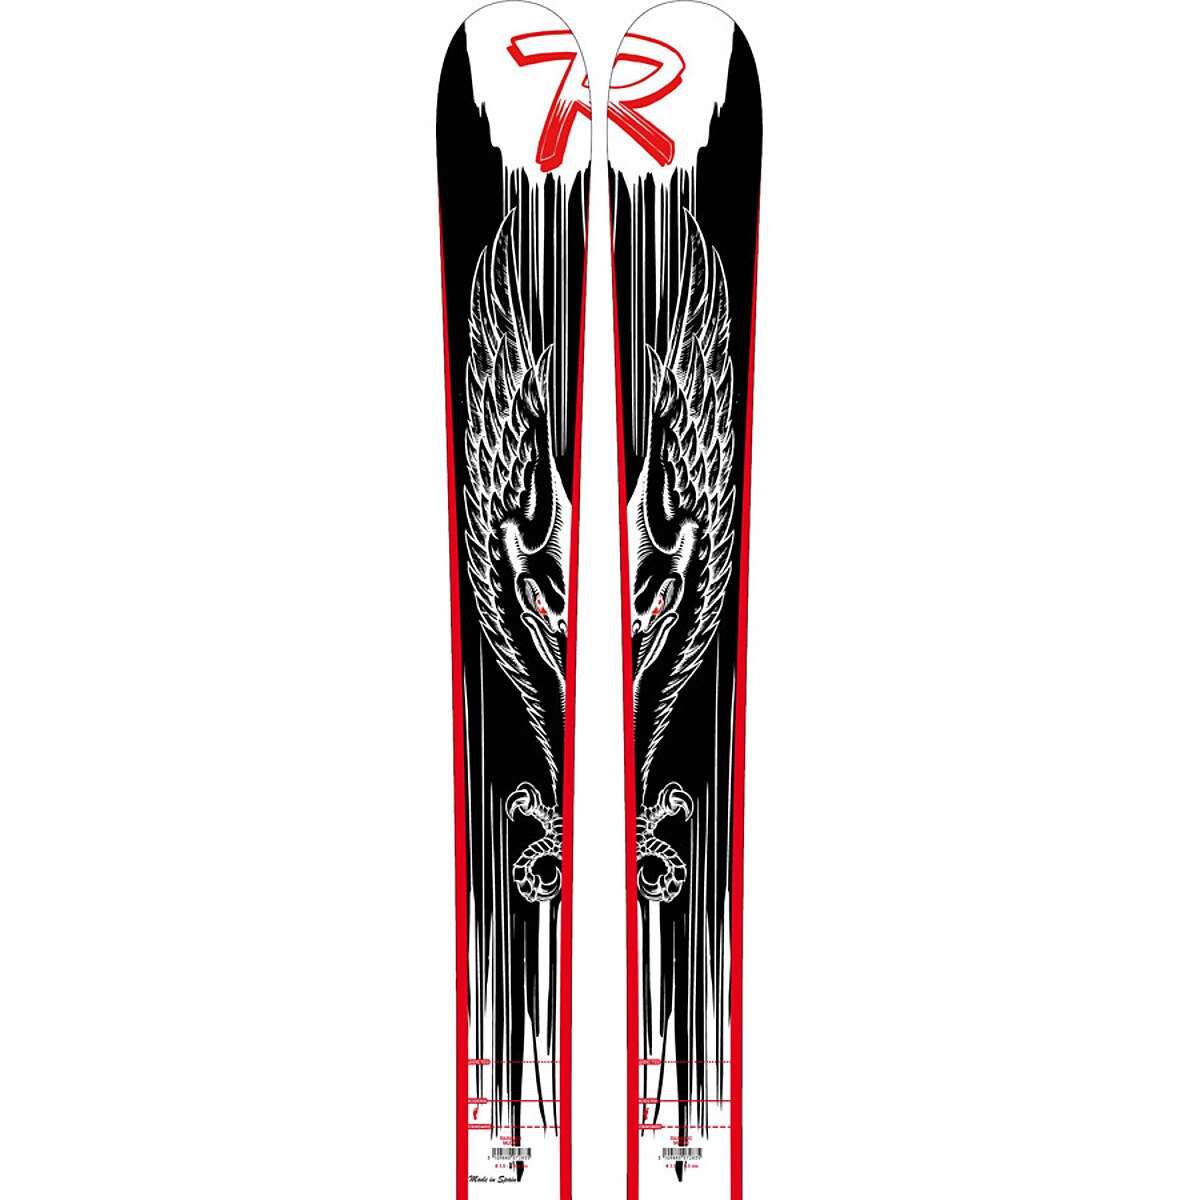 Item 902083 - Rossignol Scratch - Women's Alpine Skis - Size 1